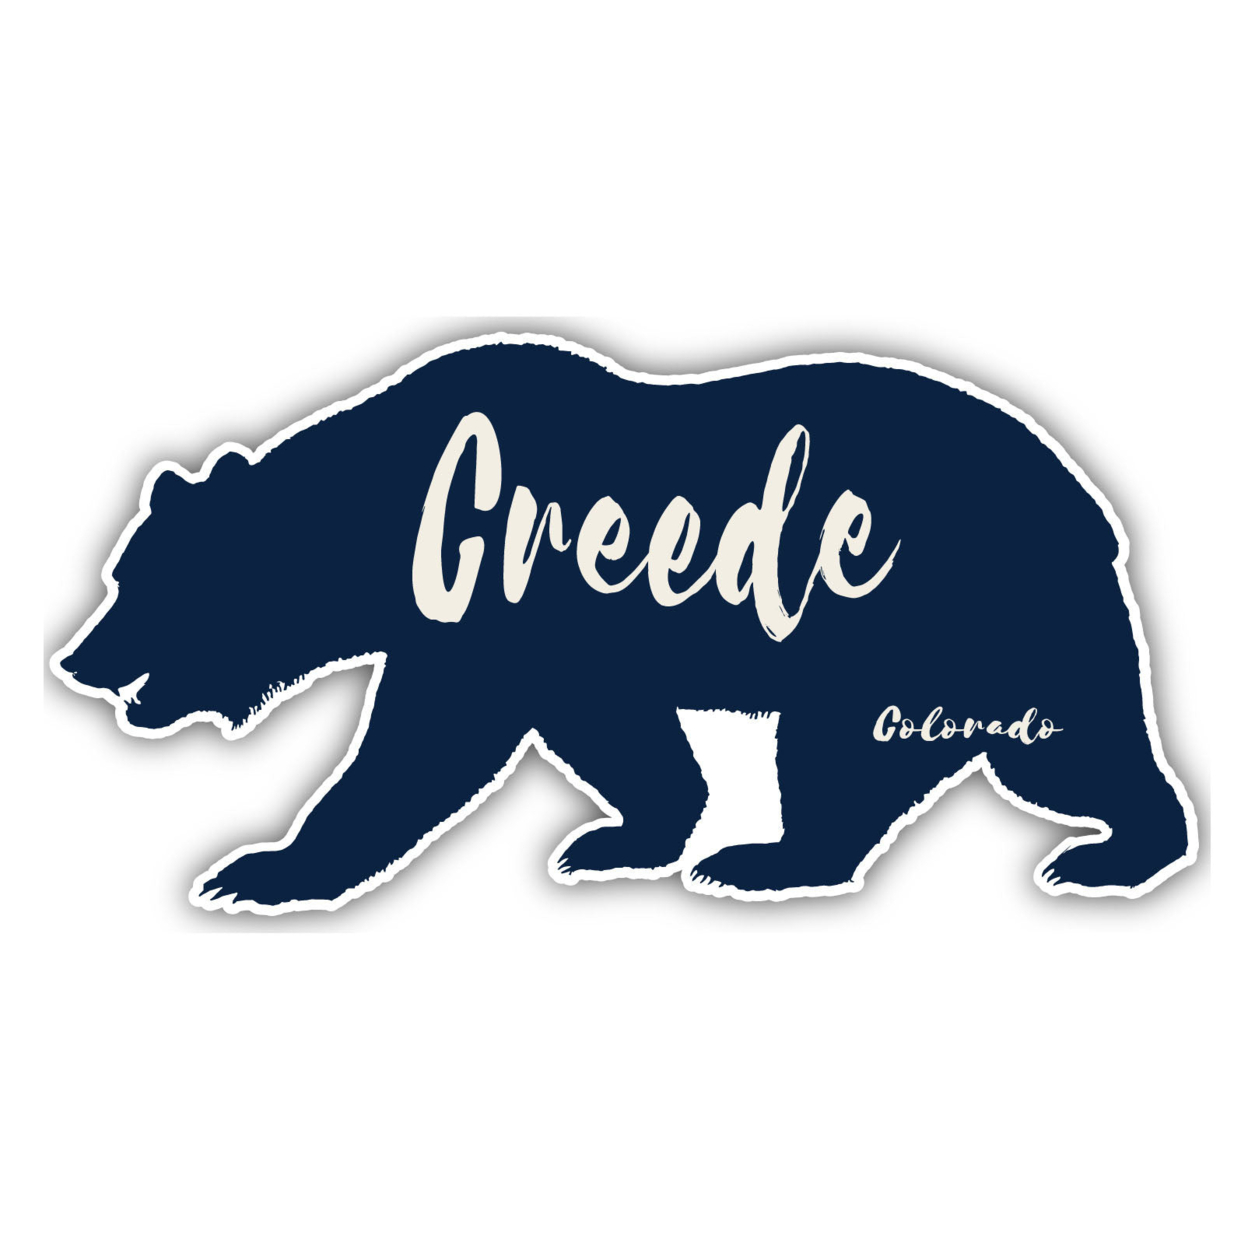 Creede Colorado Souvenir Decorative Stickers (Choose Theme And Size) - Single Unit, 2-Inch, Camp Life